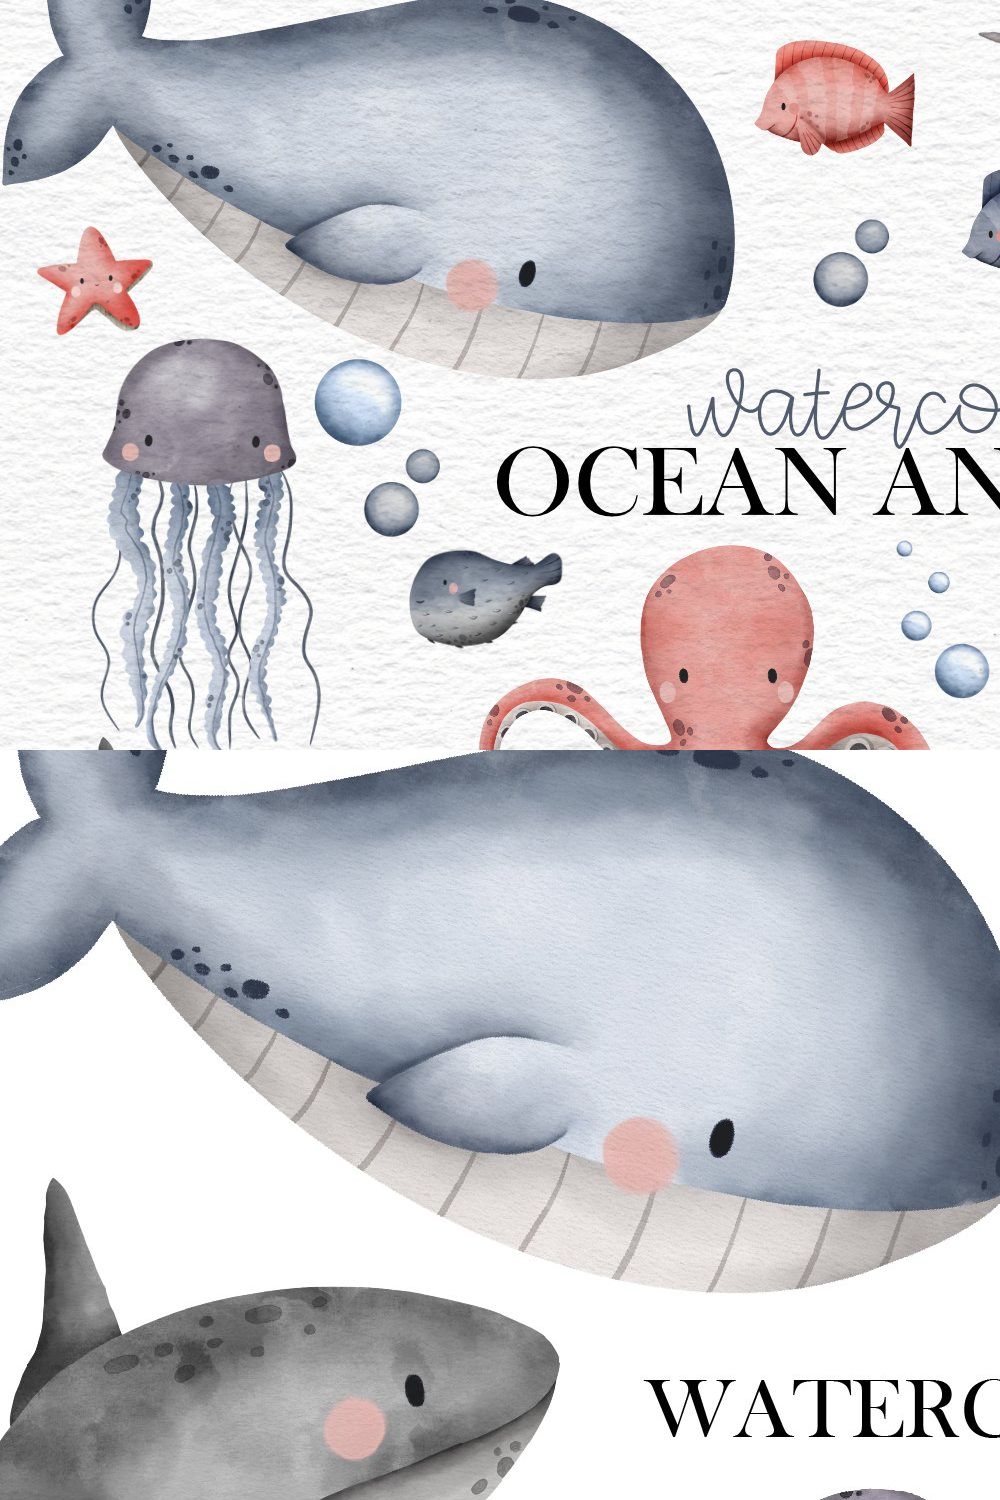 Ocean Animals pinterest preview image.